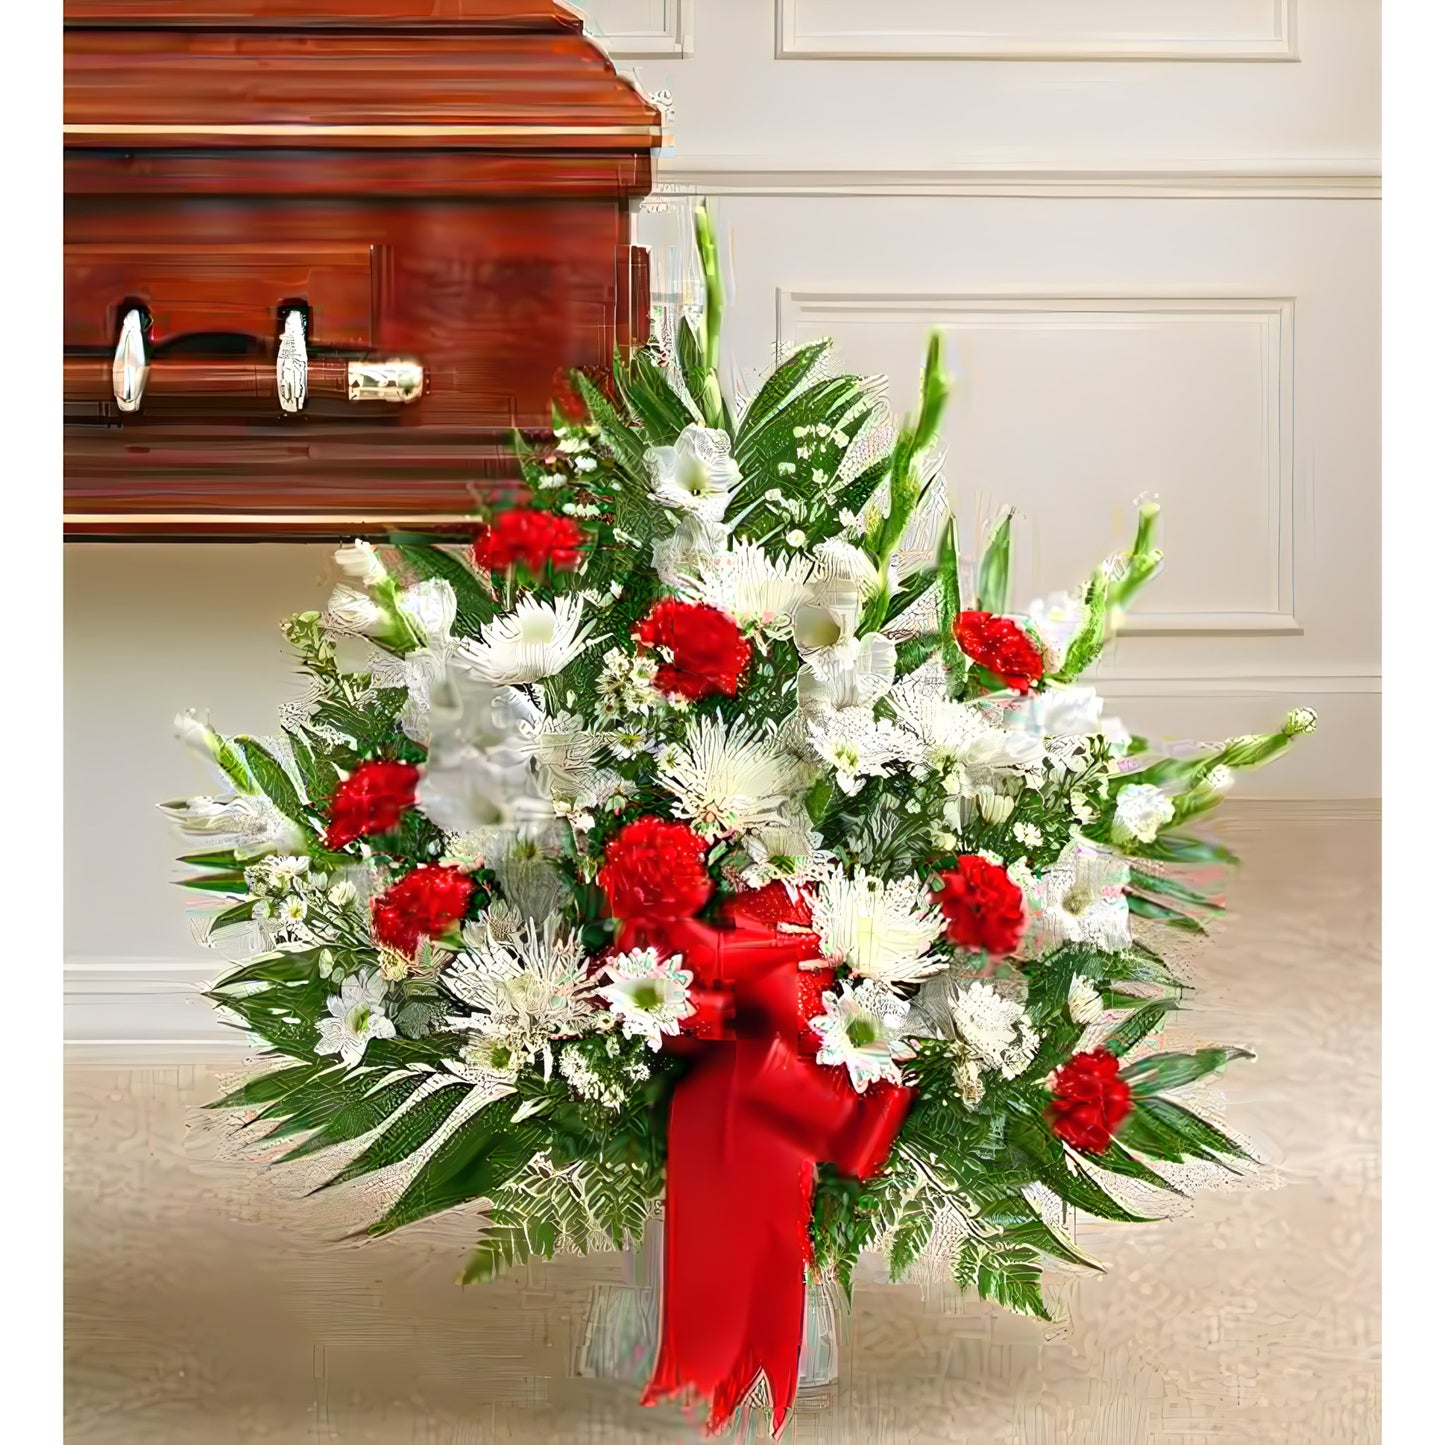 Tribute Red & White Floor Basket Arrangement - Floral_Arrangement - Flower Delivery NYC